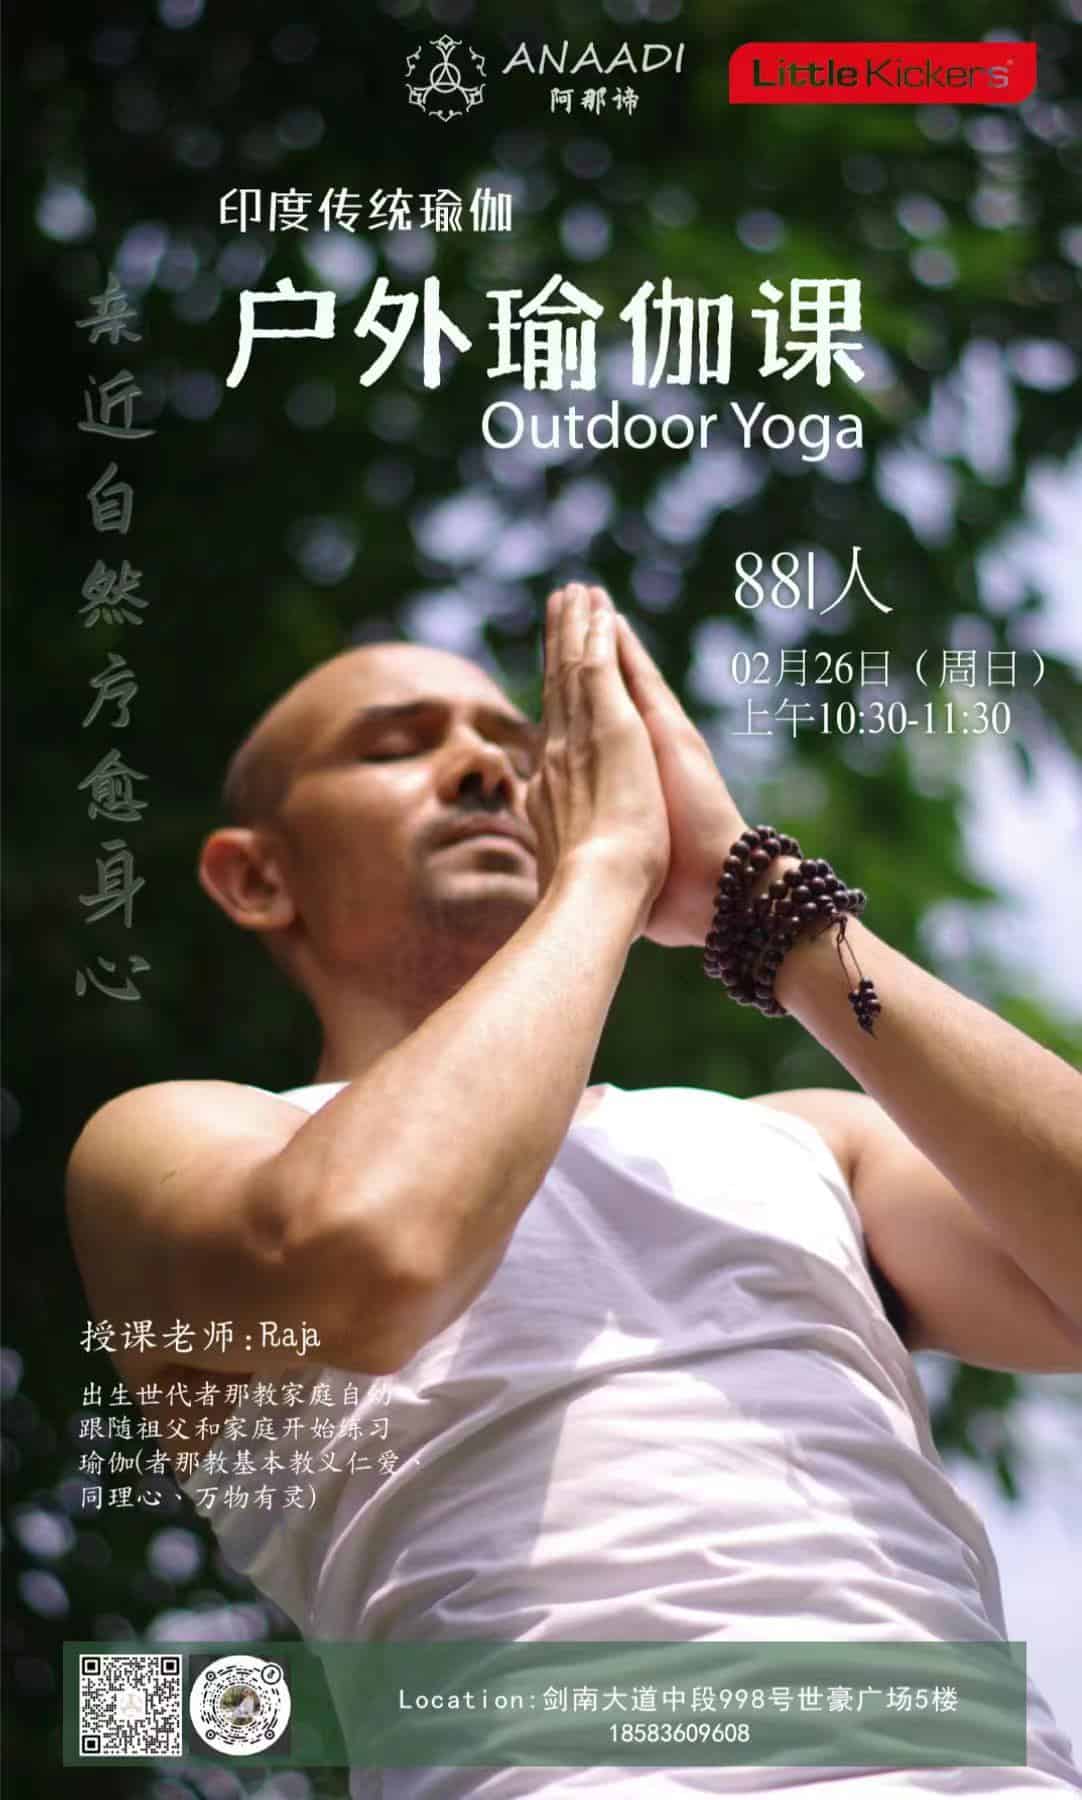 ANAADI Yoga outdoor event chengdu expat